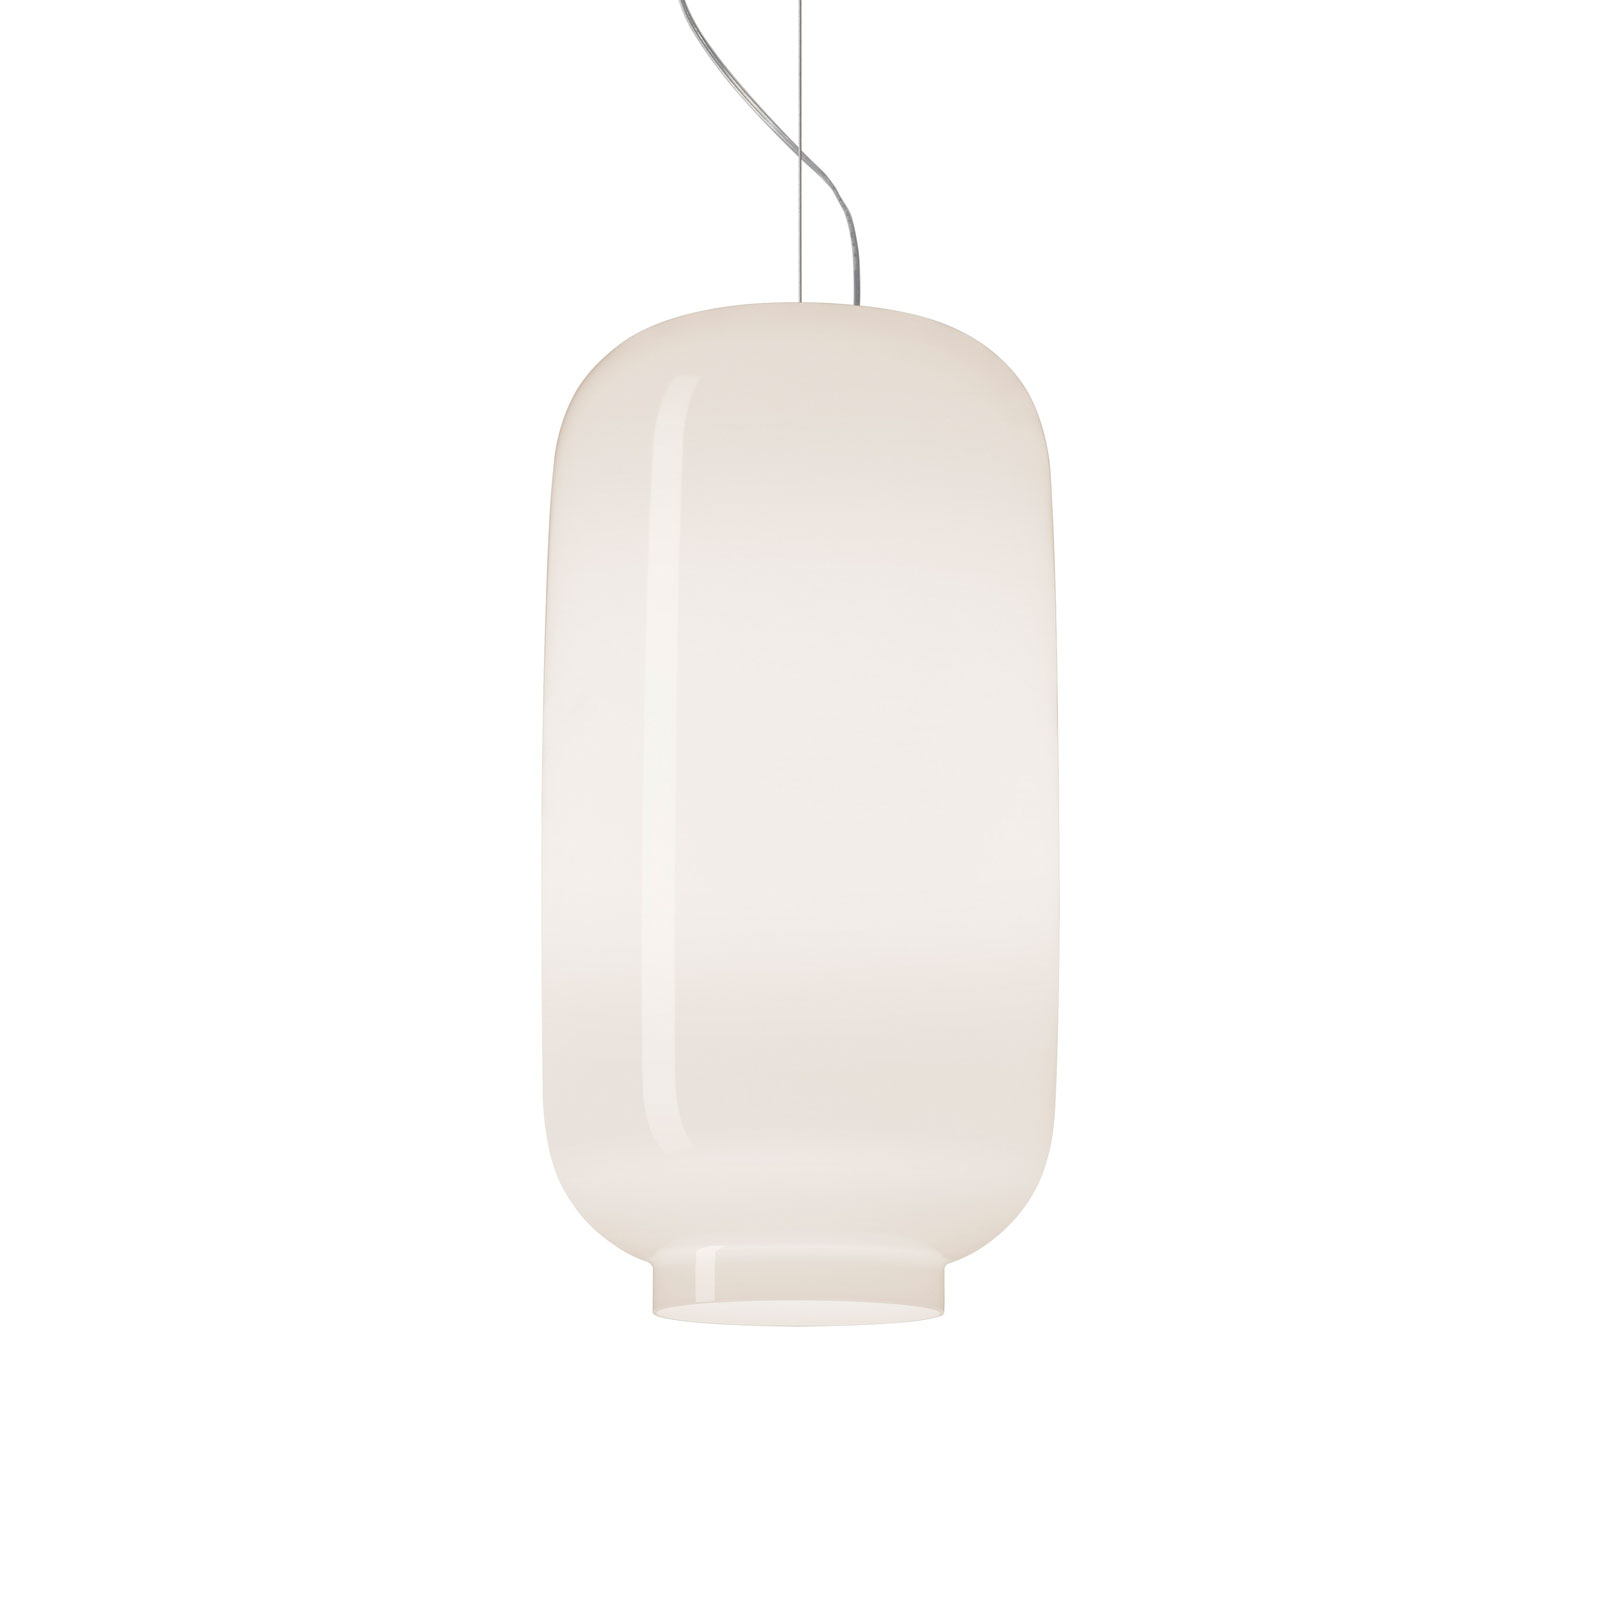 Foscarini Chouchin Bianco 2 -LED-riippuvalo on/off